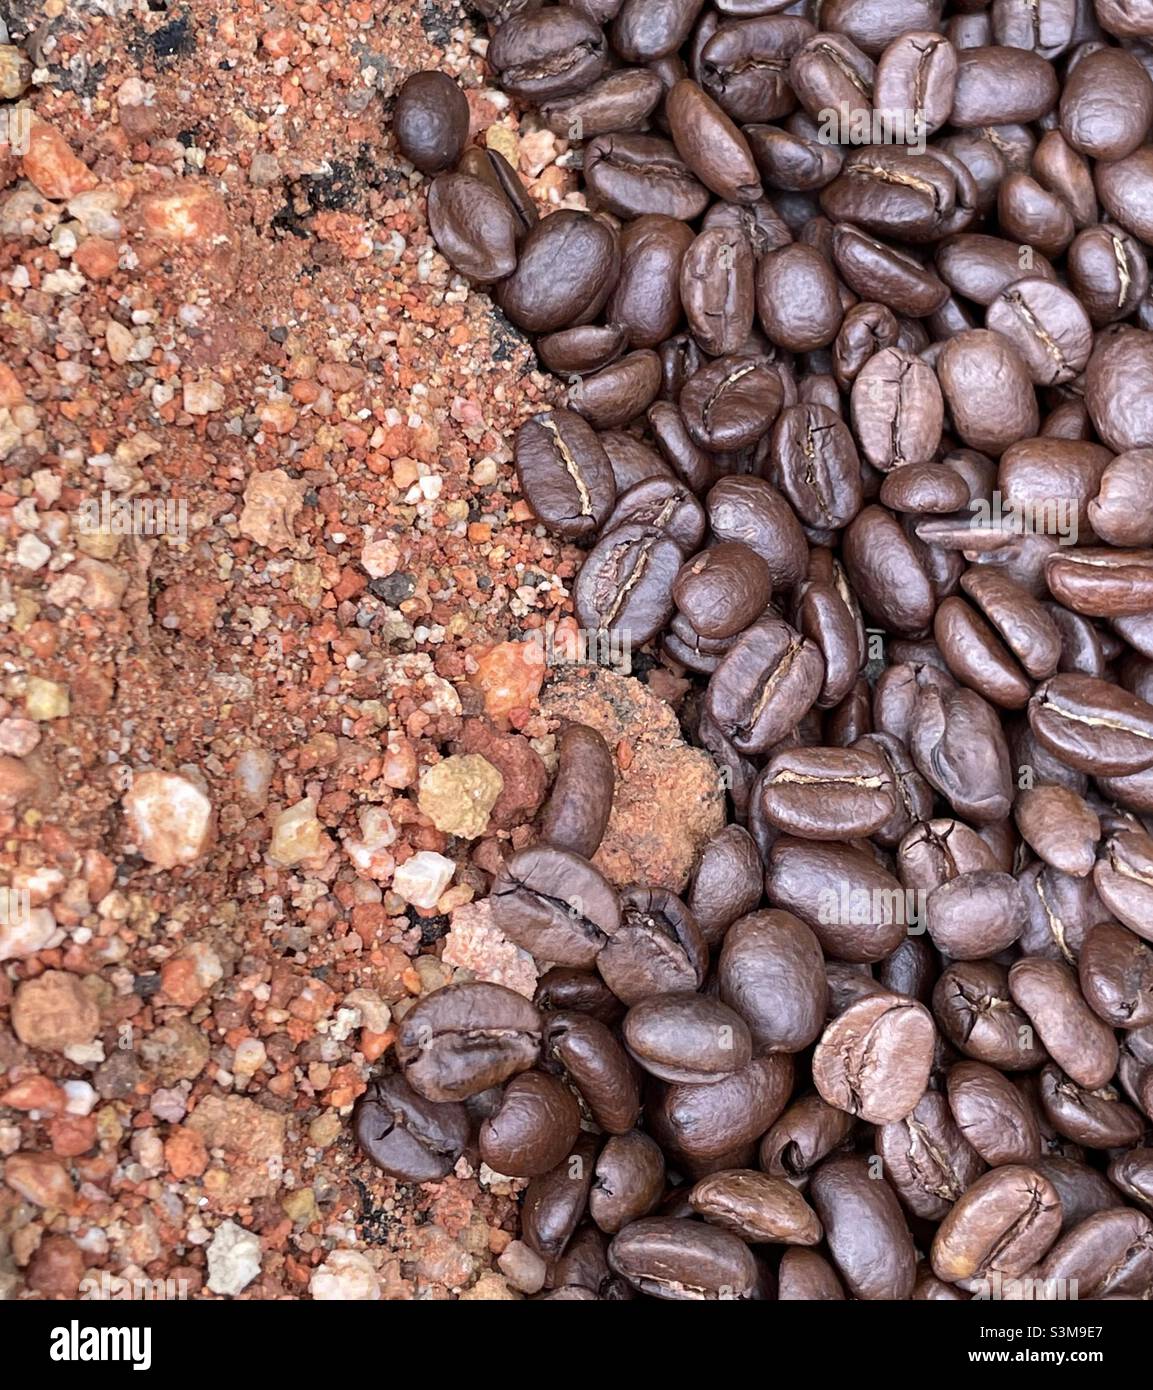 Expired coffee beans Stock Photo